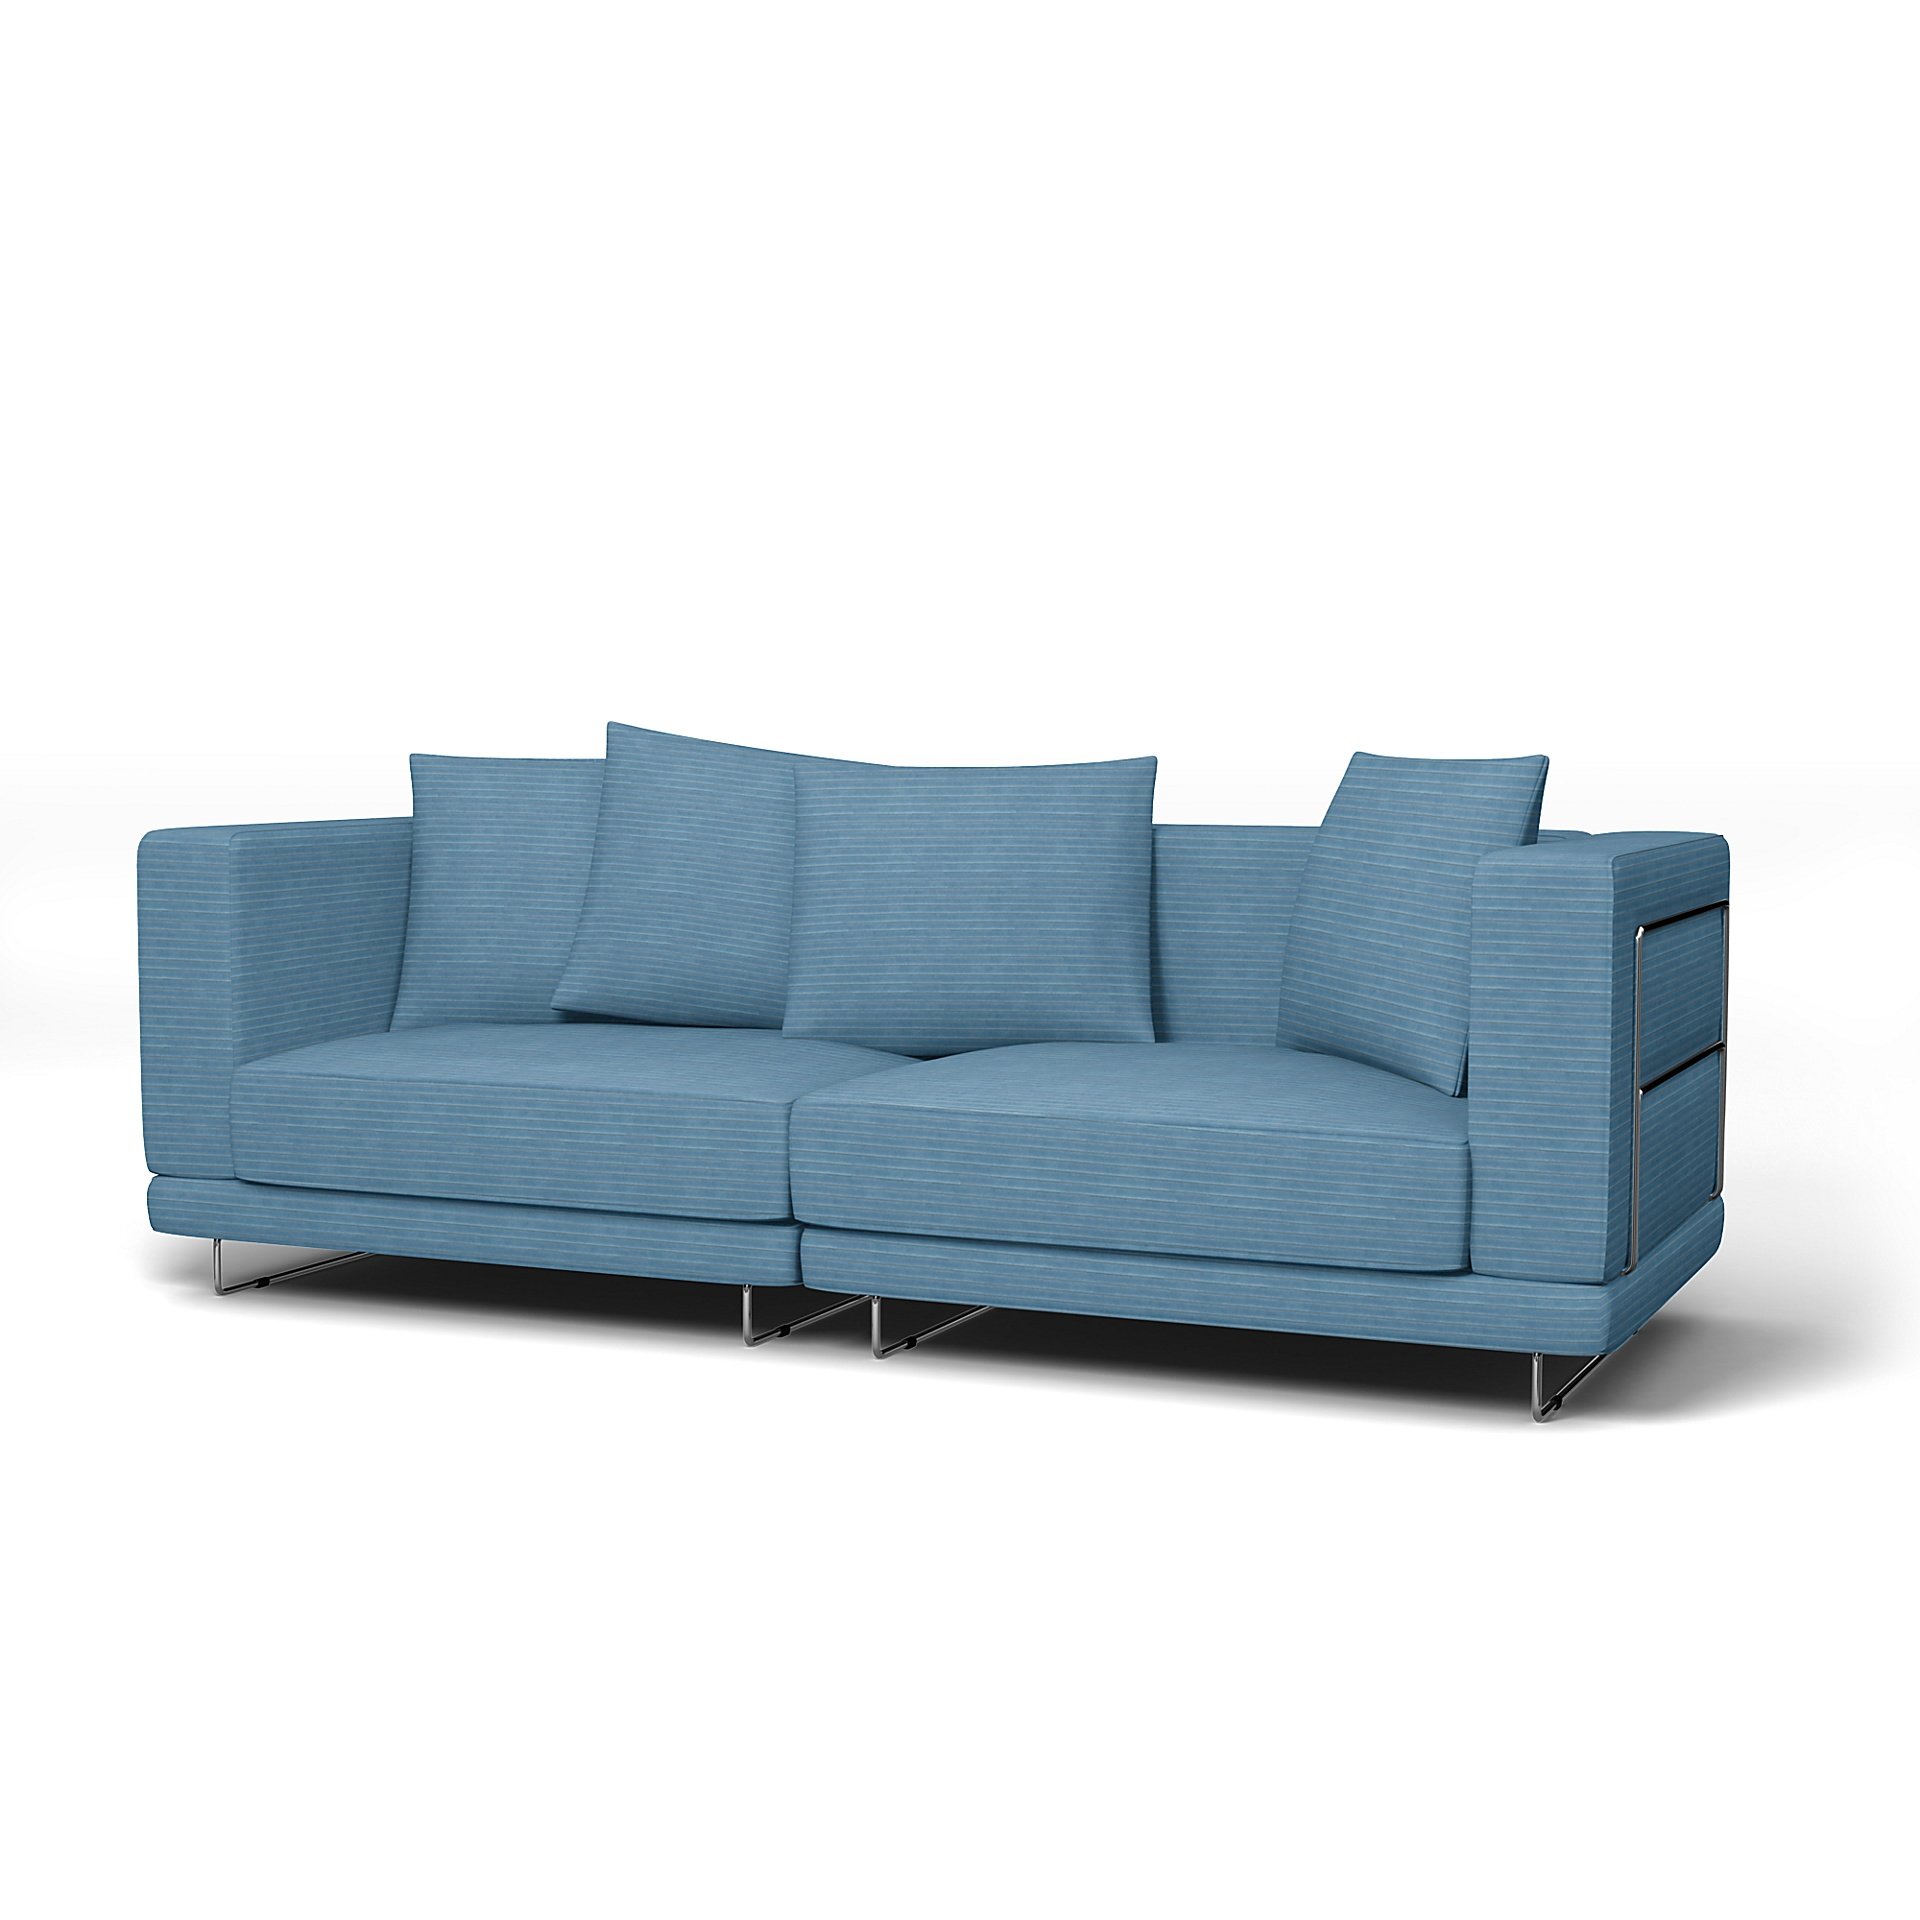 IKEA - Tylosand 3 Seater Sofa Cover, Sky Blue, Corduroy - Bemz